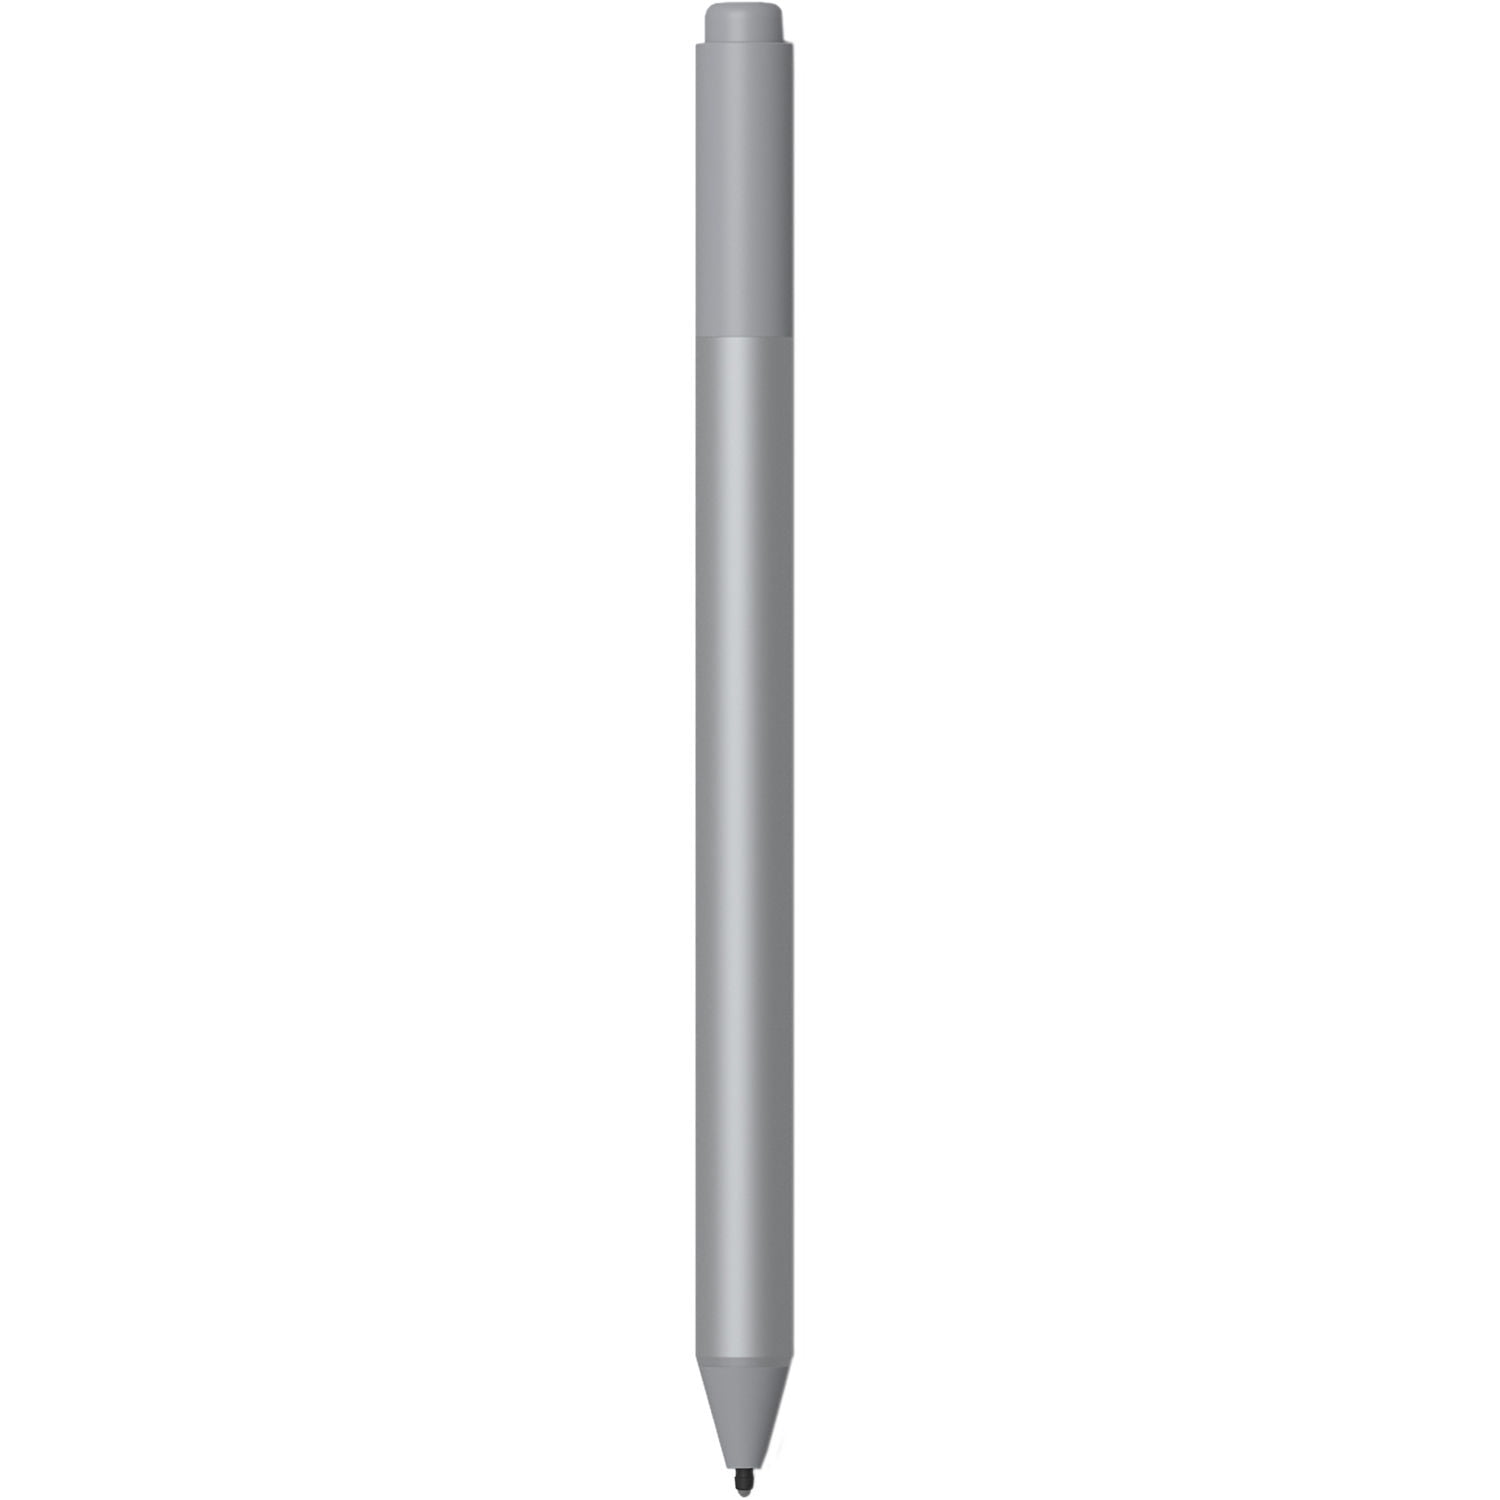 NEW Microsoft Surface Pen Stylus Platinum Model 1776 FREE 2 DAY SHIPPING 